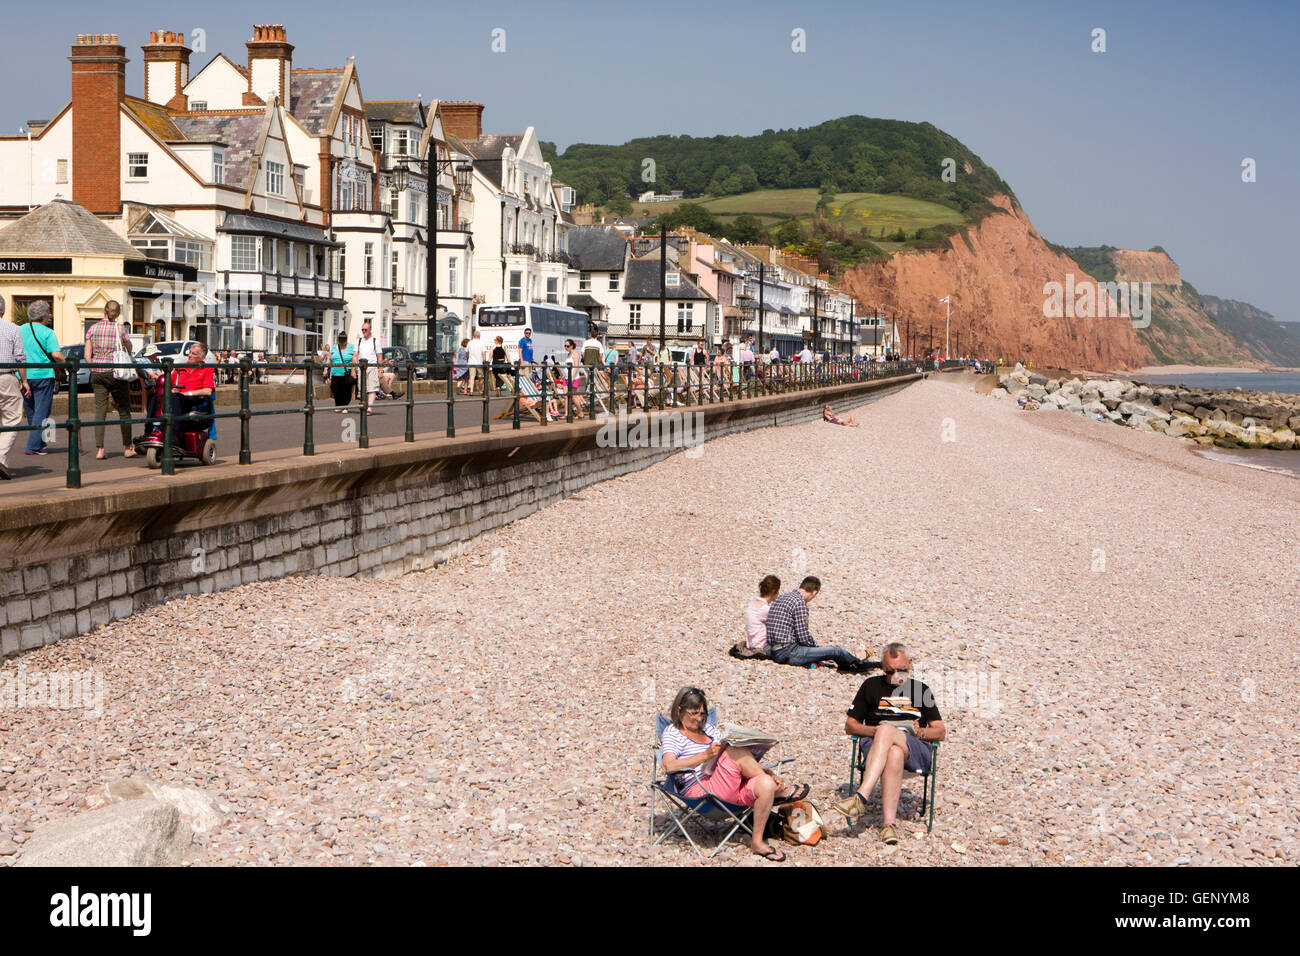 UK, England, Devon, Sidmouth, The Esplanade, older visitors on beach in sunshine Stock Photo